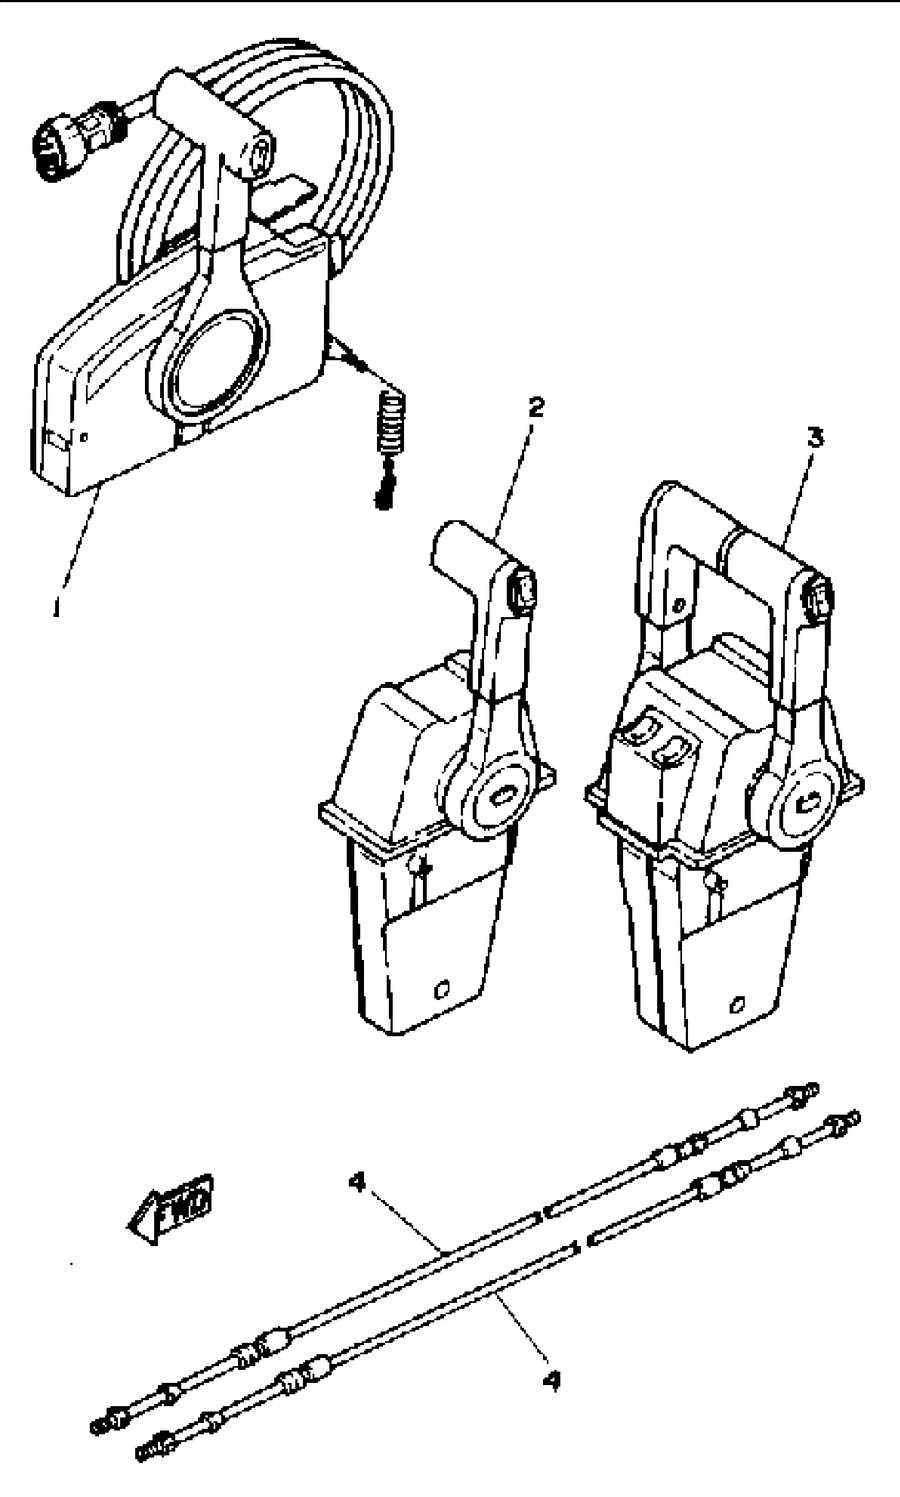 1990 250ETXD REMOTE CONTROL CABLES